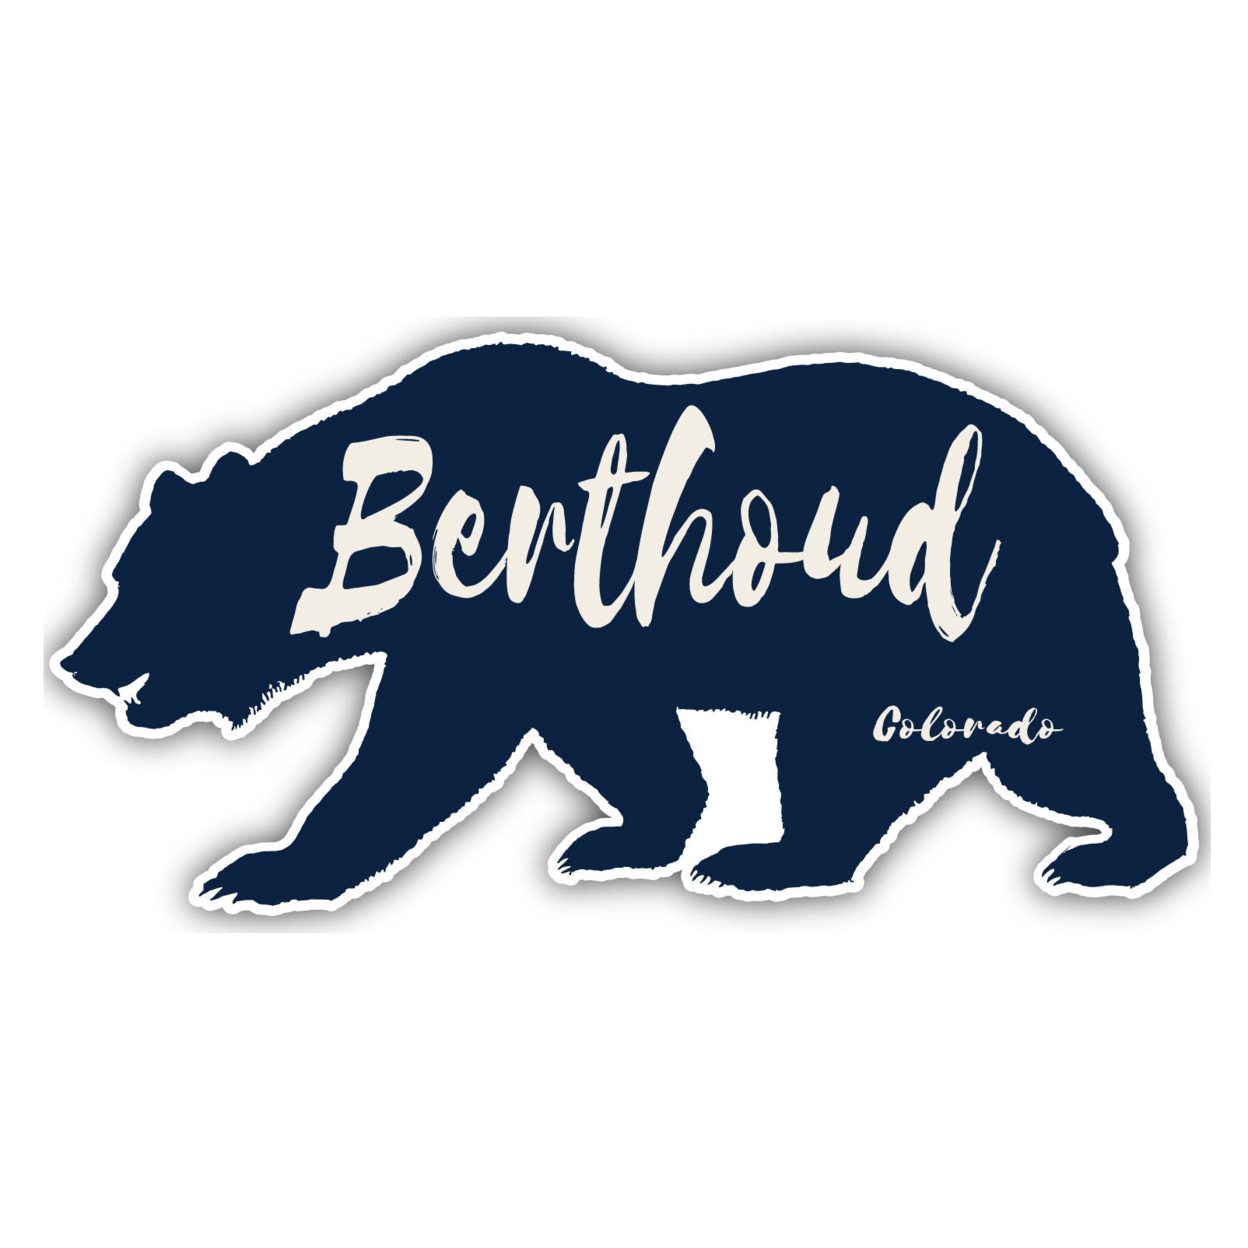 Berthoud Colorado Souvenir Decorative Stickers (Choose Theme And Size) - Single Unit, 2-Inch, Bear